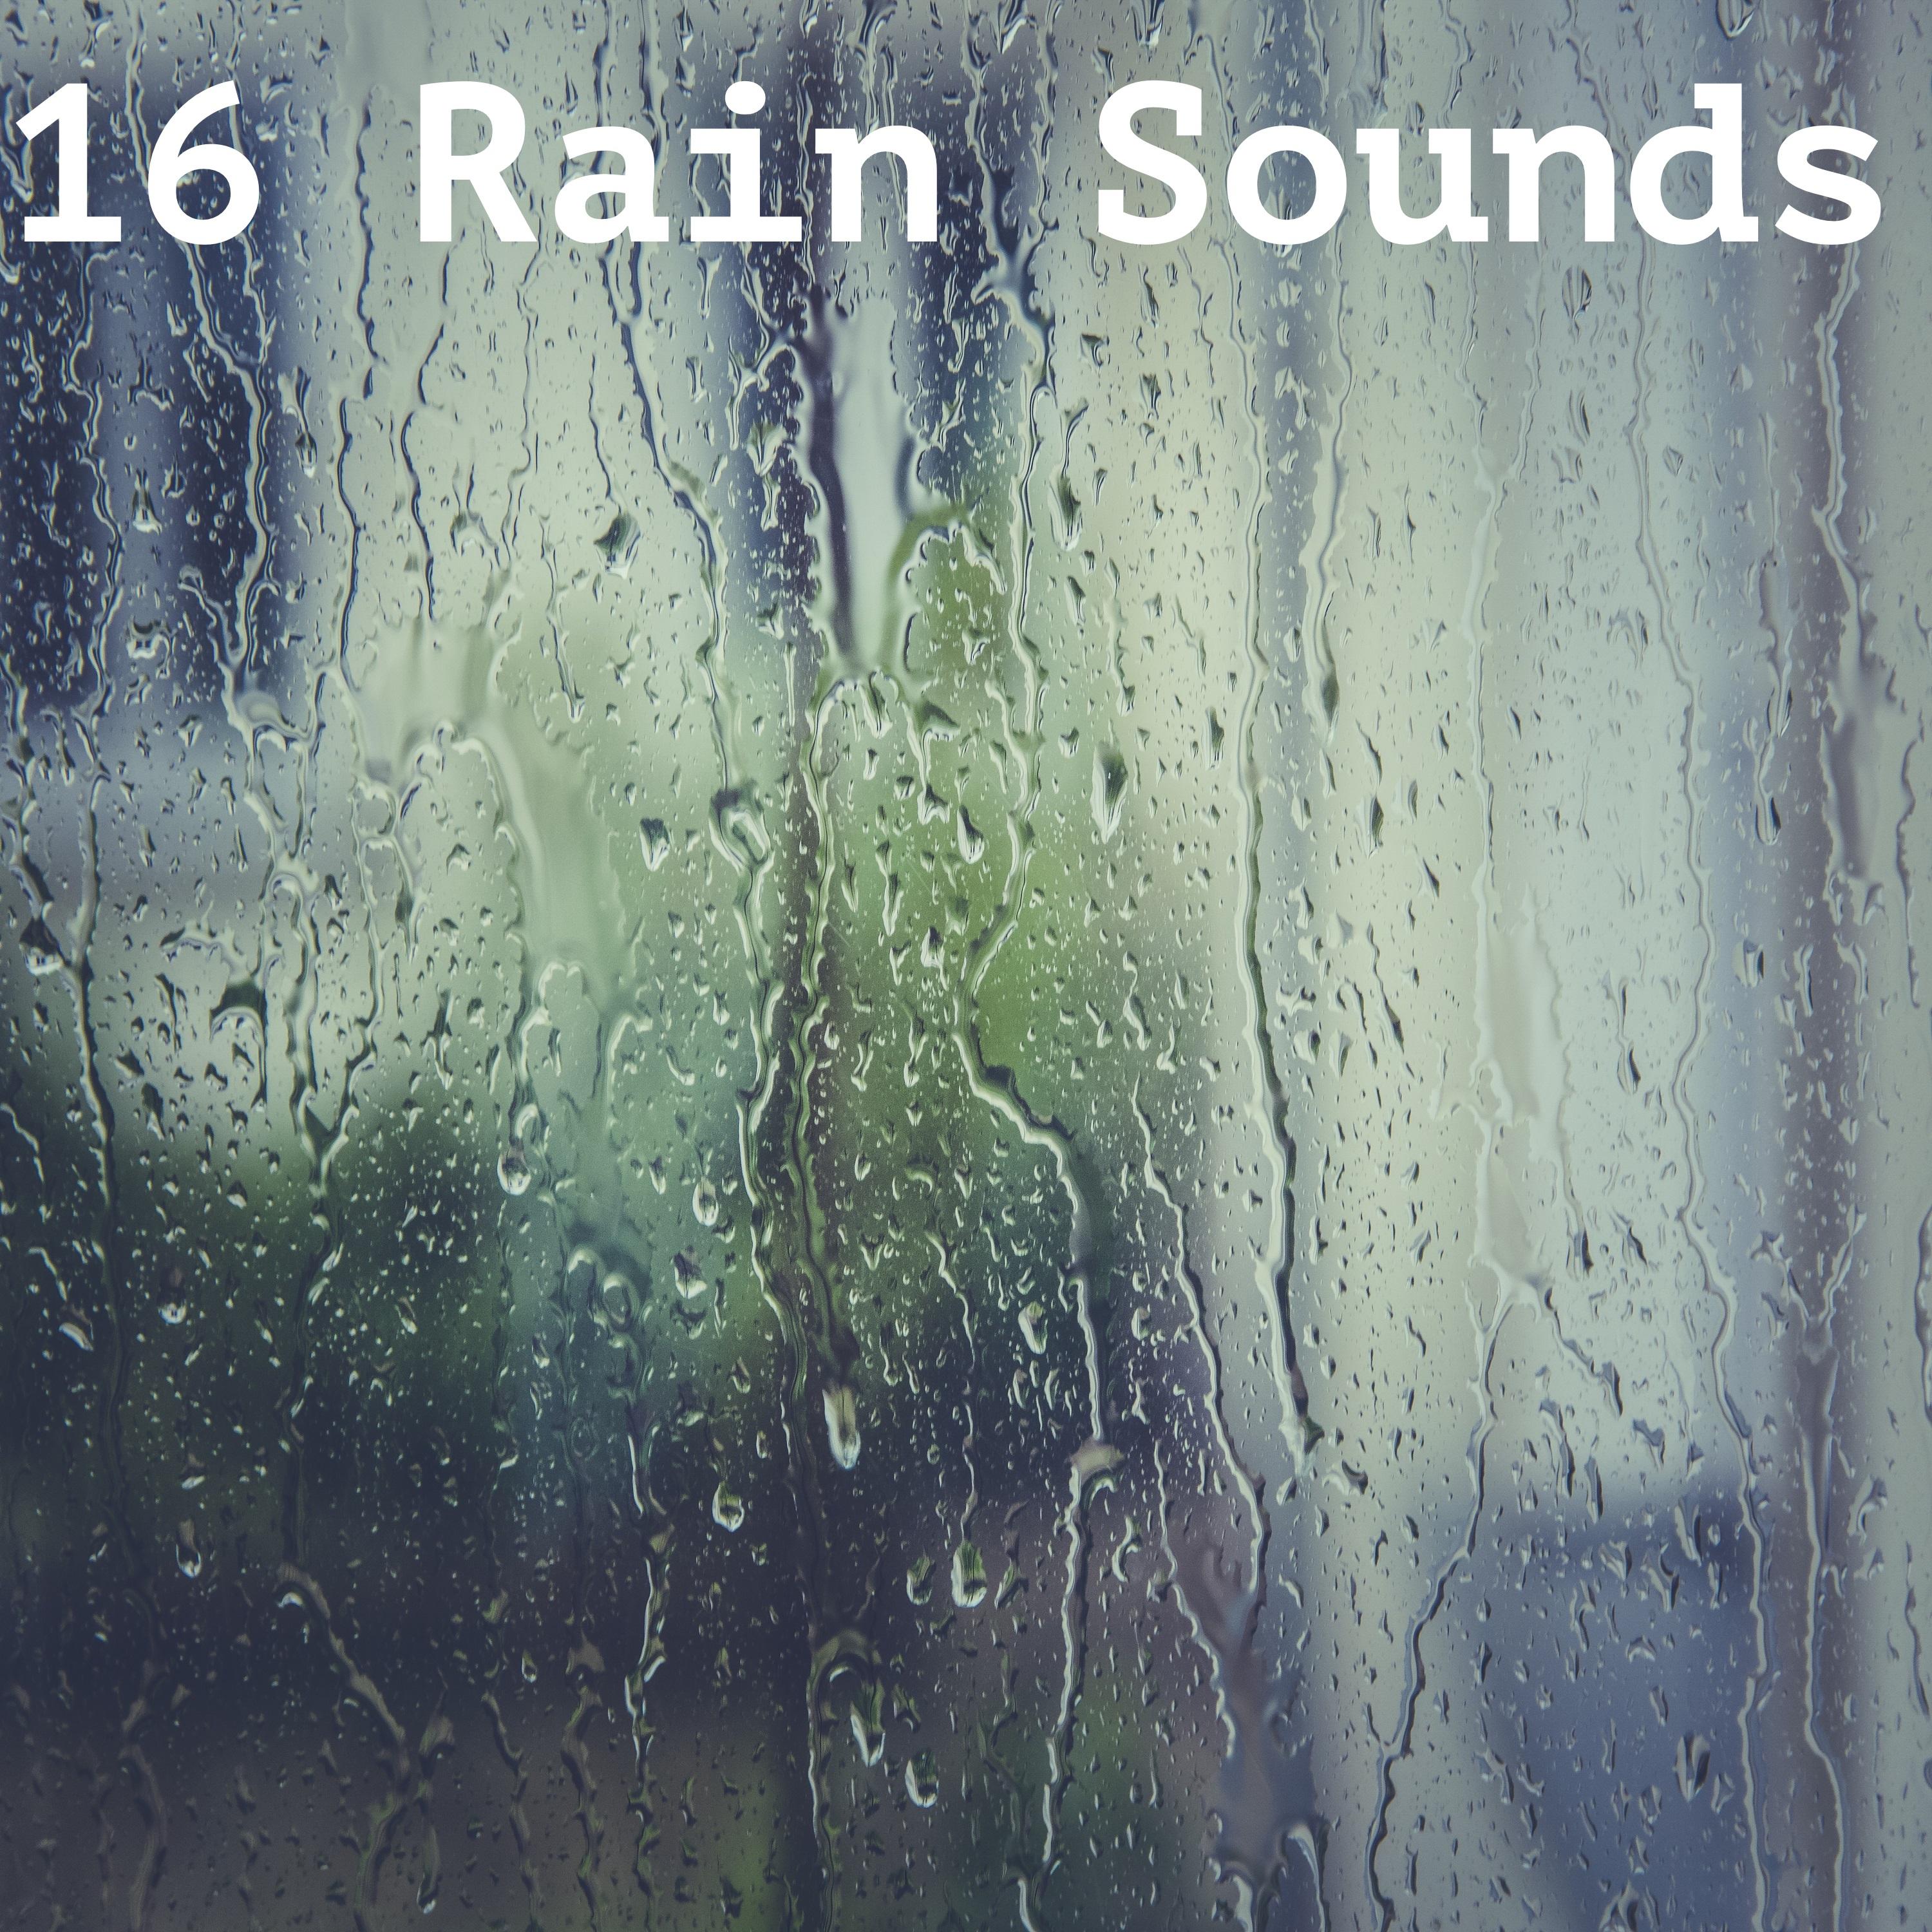 16 Rain Sounds for Sleep and Meditation. Zen Sounds Spa Sounds